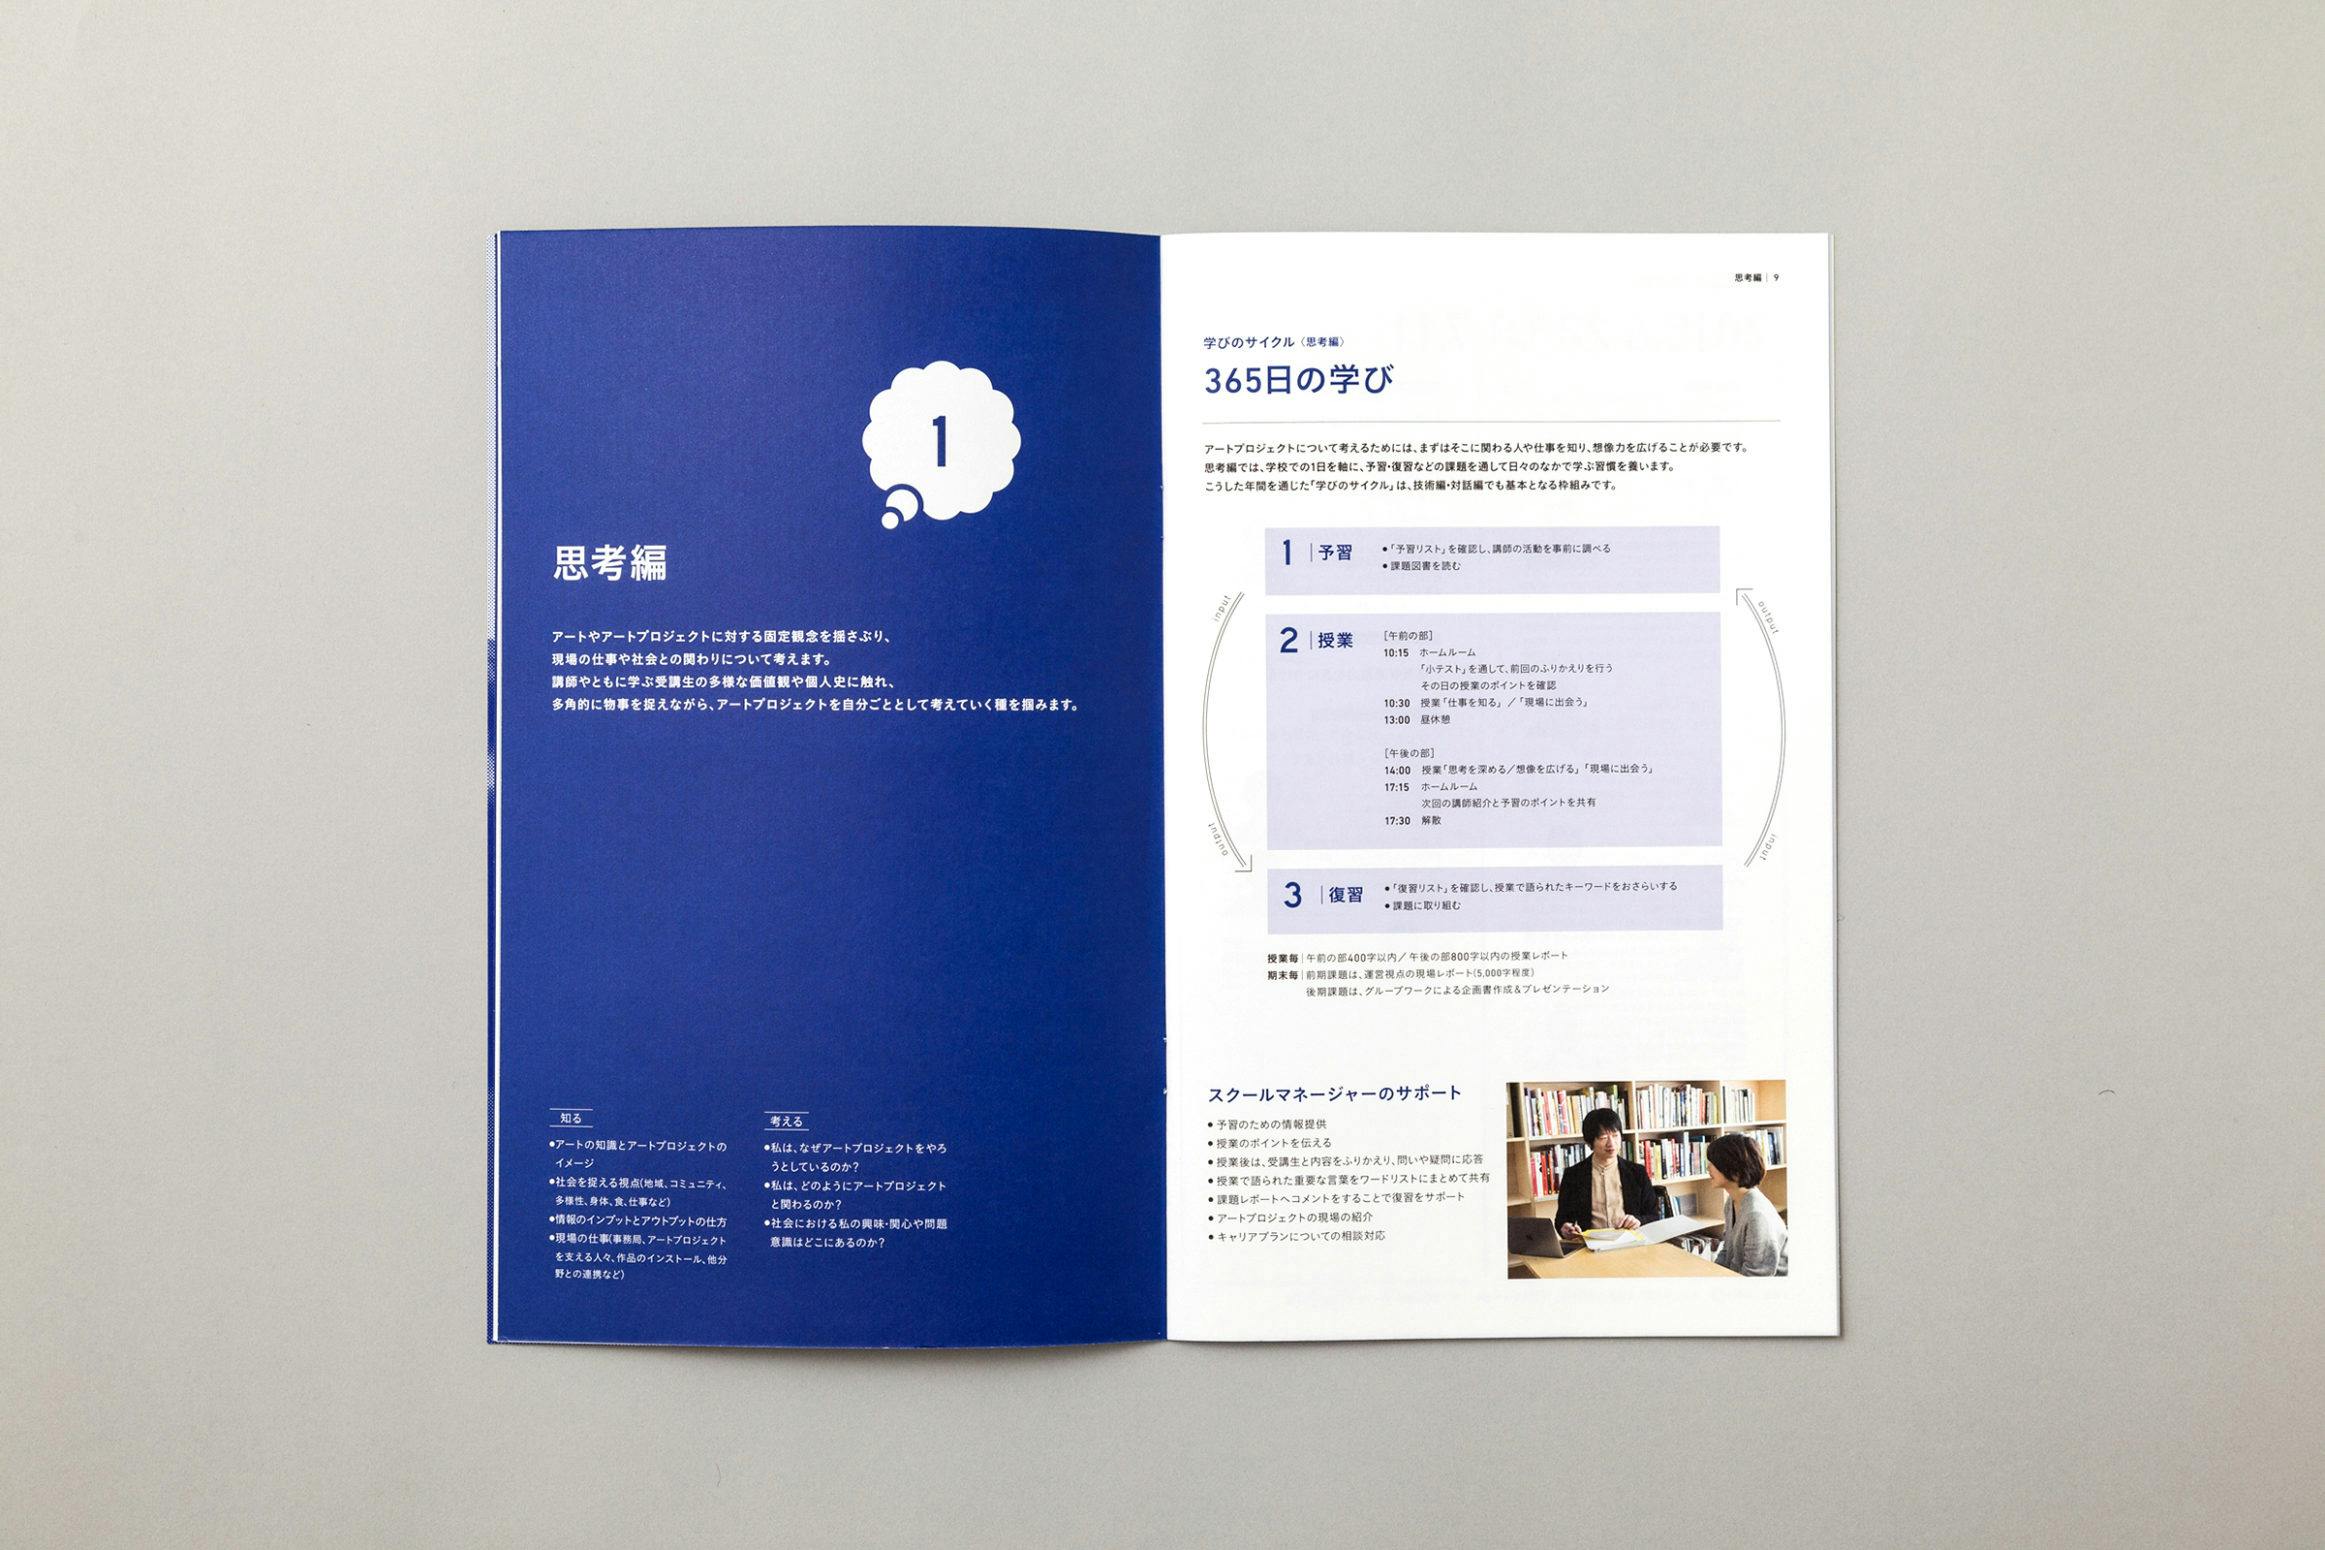 Tokyo Art Research Lab__思考と技術と対話の学校__2015